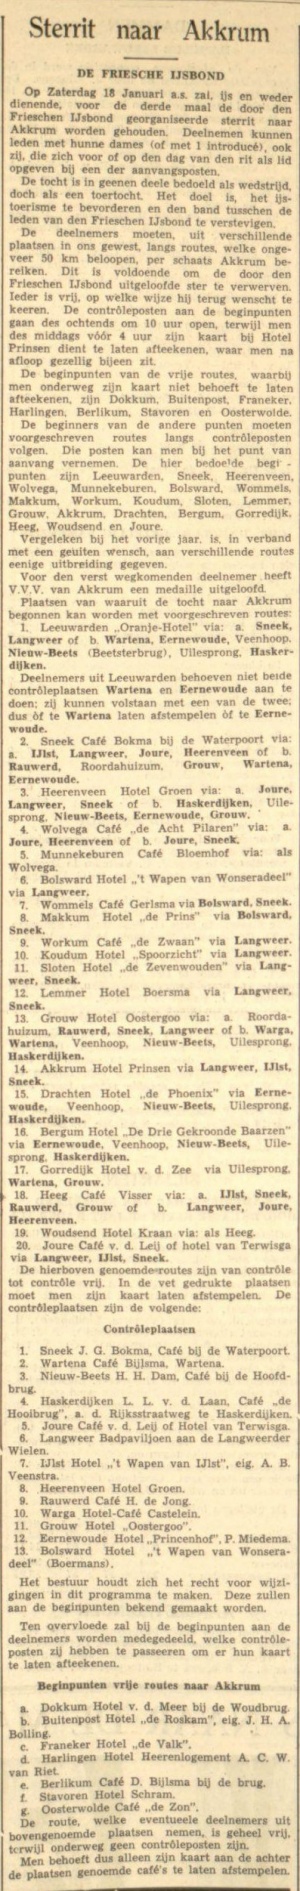 Leeuwarder courant, 16-01-1941